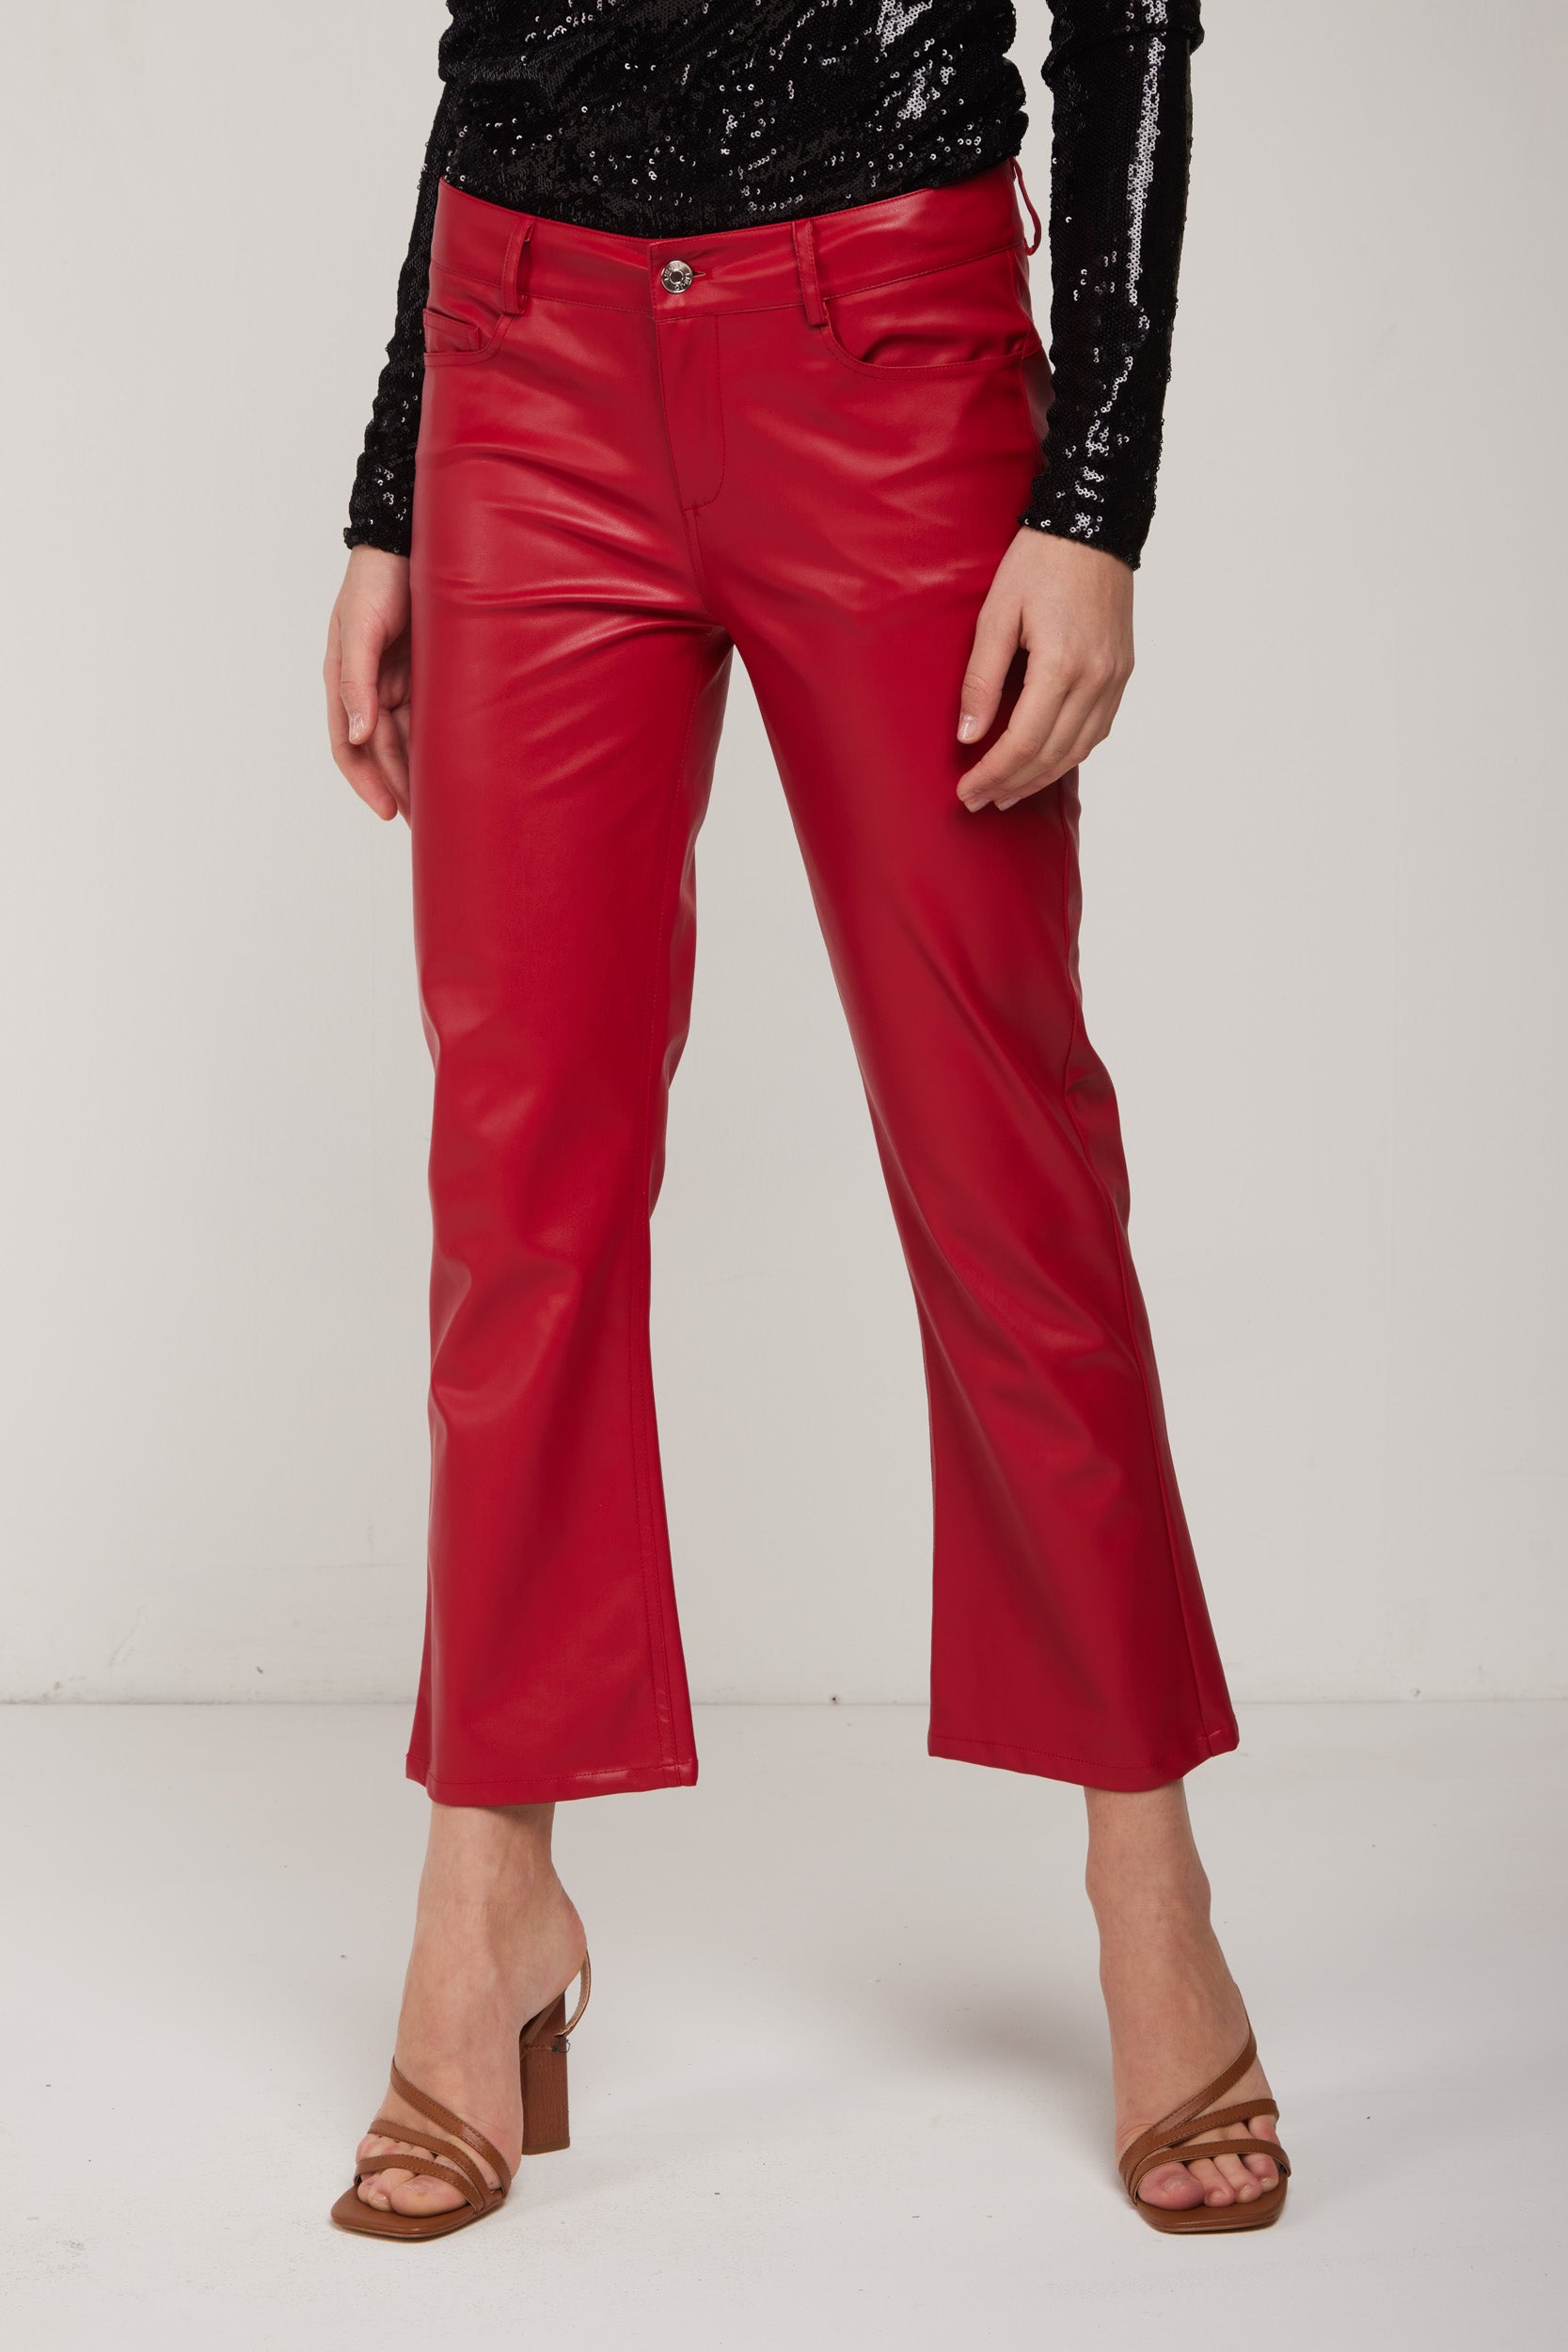 Buy Red Flame Men's Brown Slim Fit Trouser at Amazon.in